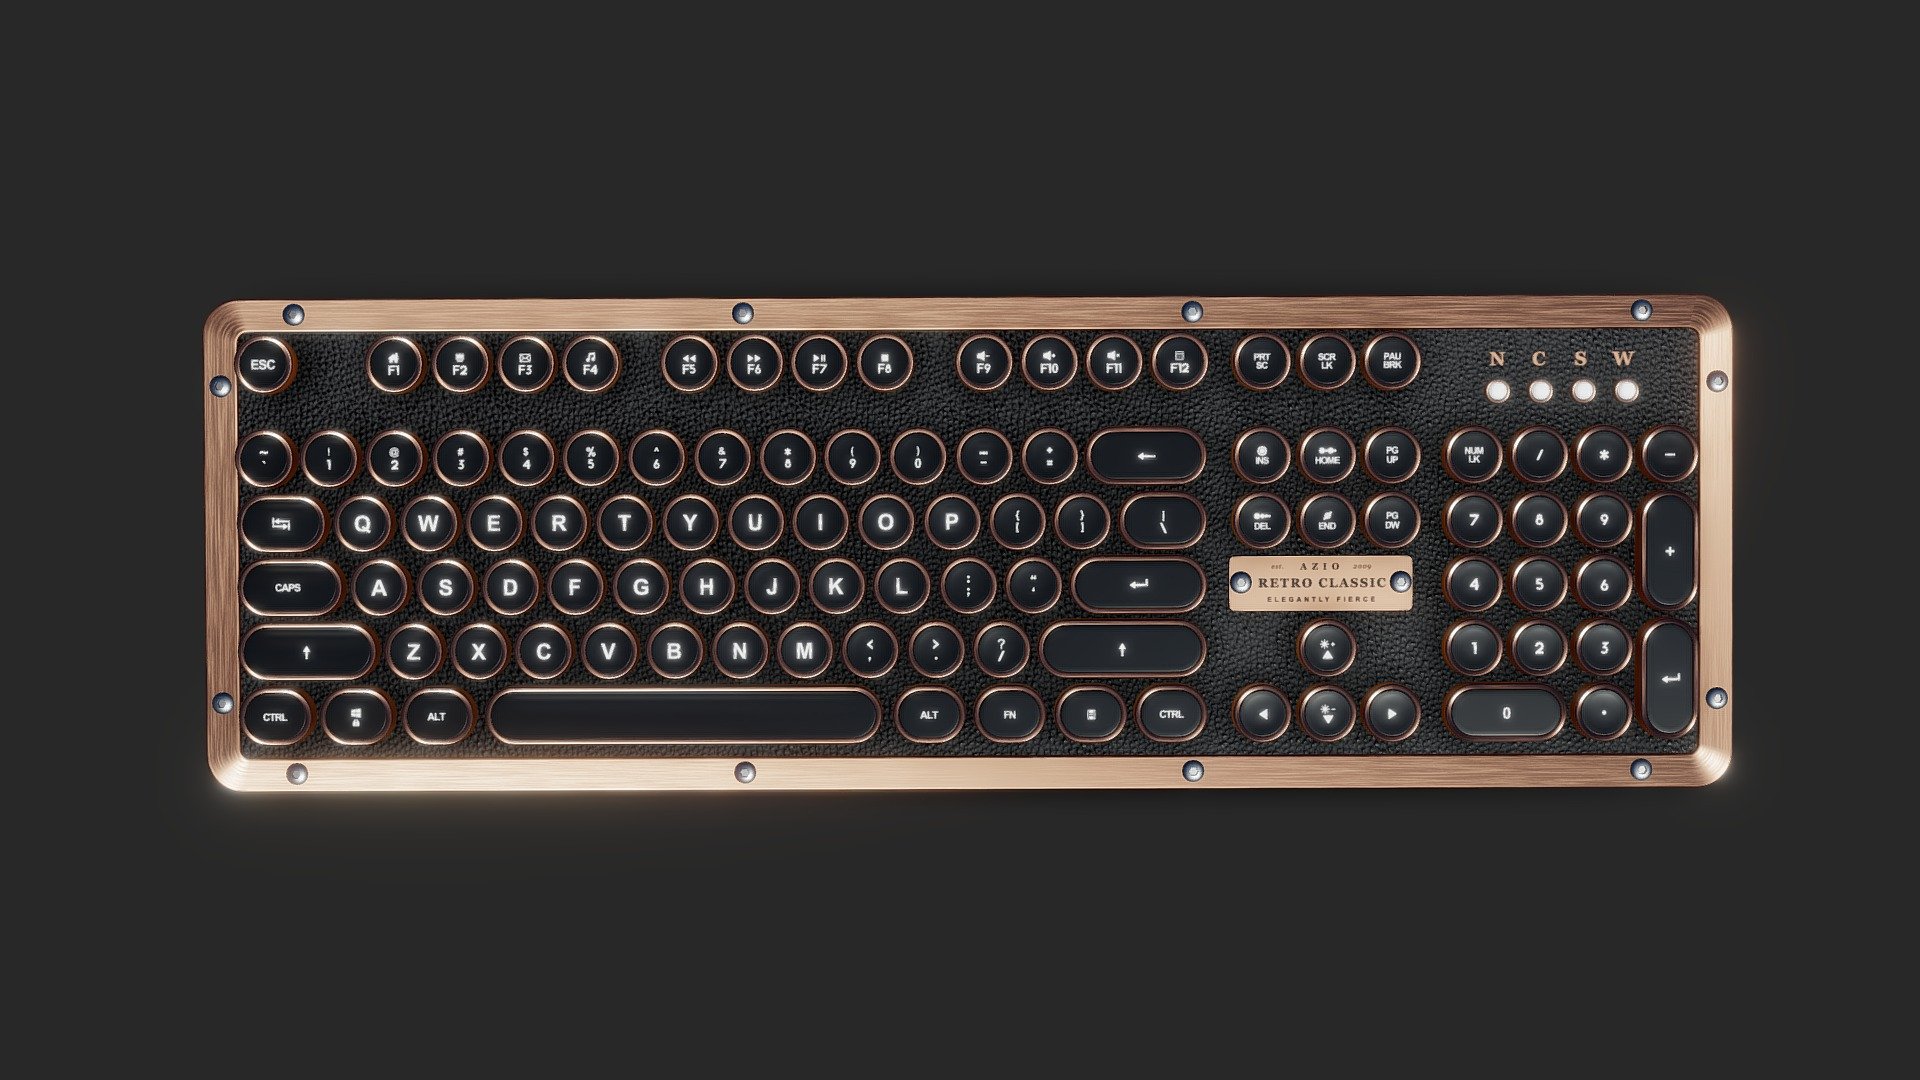 Azio Retro Classic mechanical keyboard 3d model